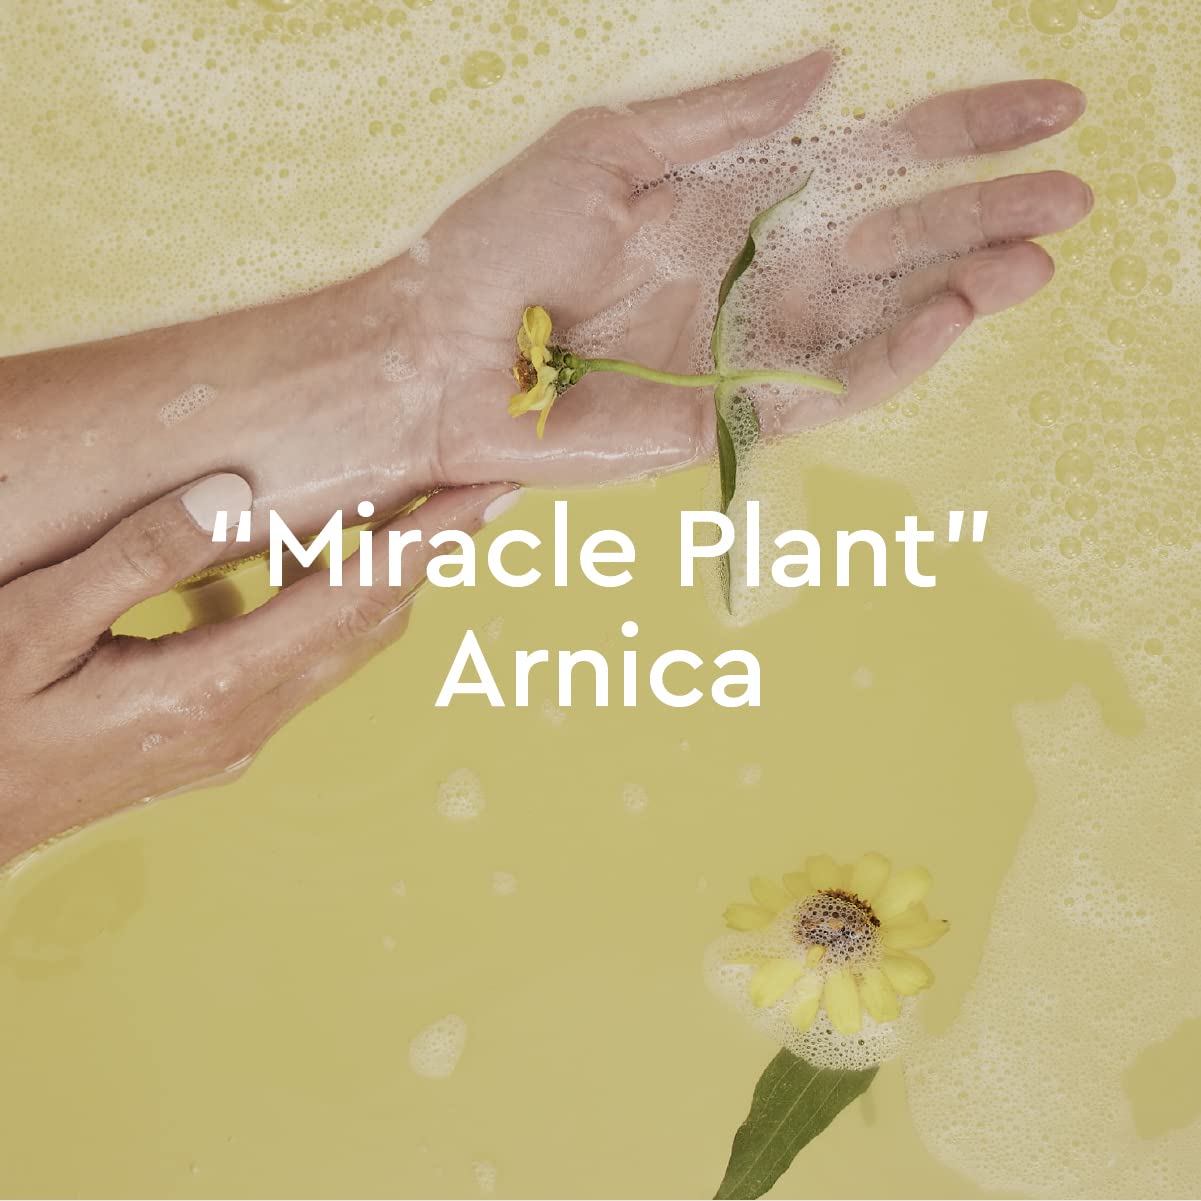 Kneipp Arnica Herbal Bath Oil for Joint & Muscles, Bath Soak, 3.38 fl. oz.